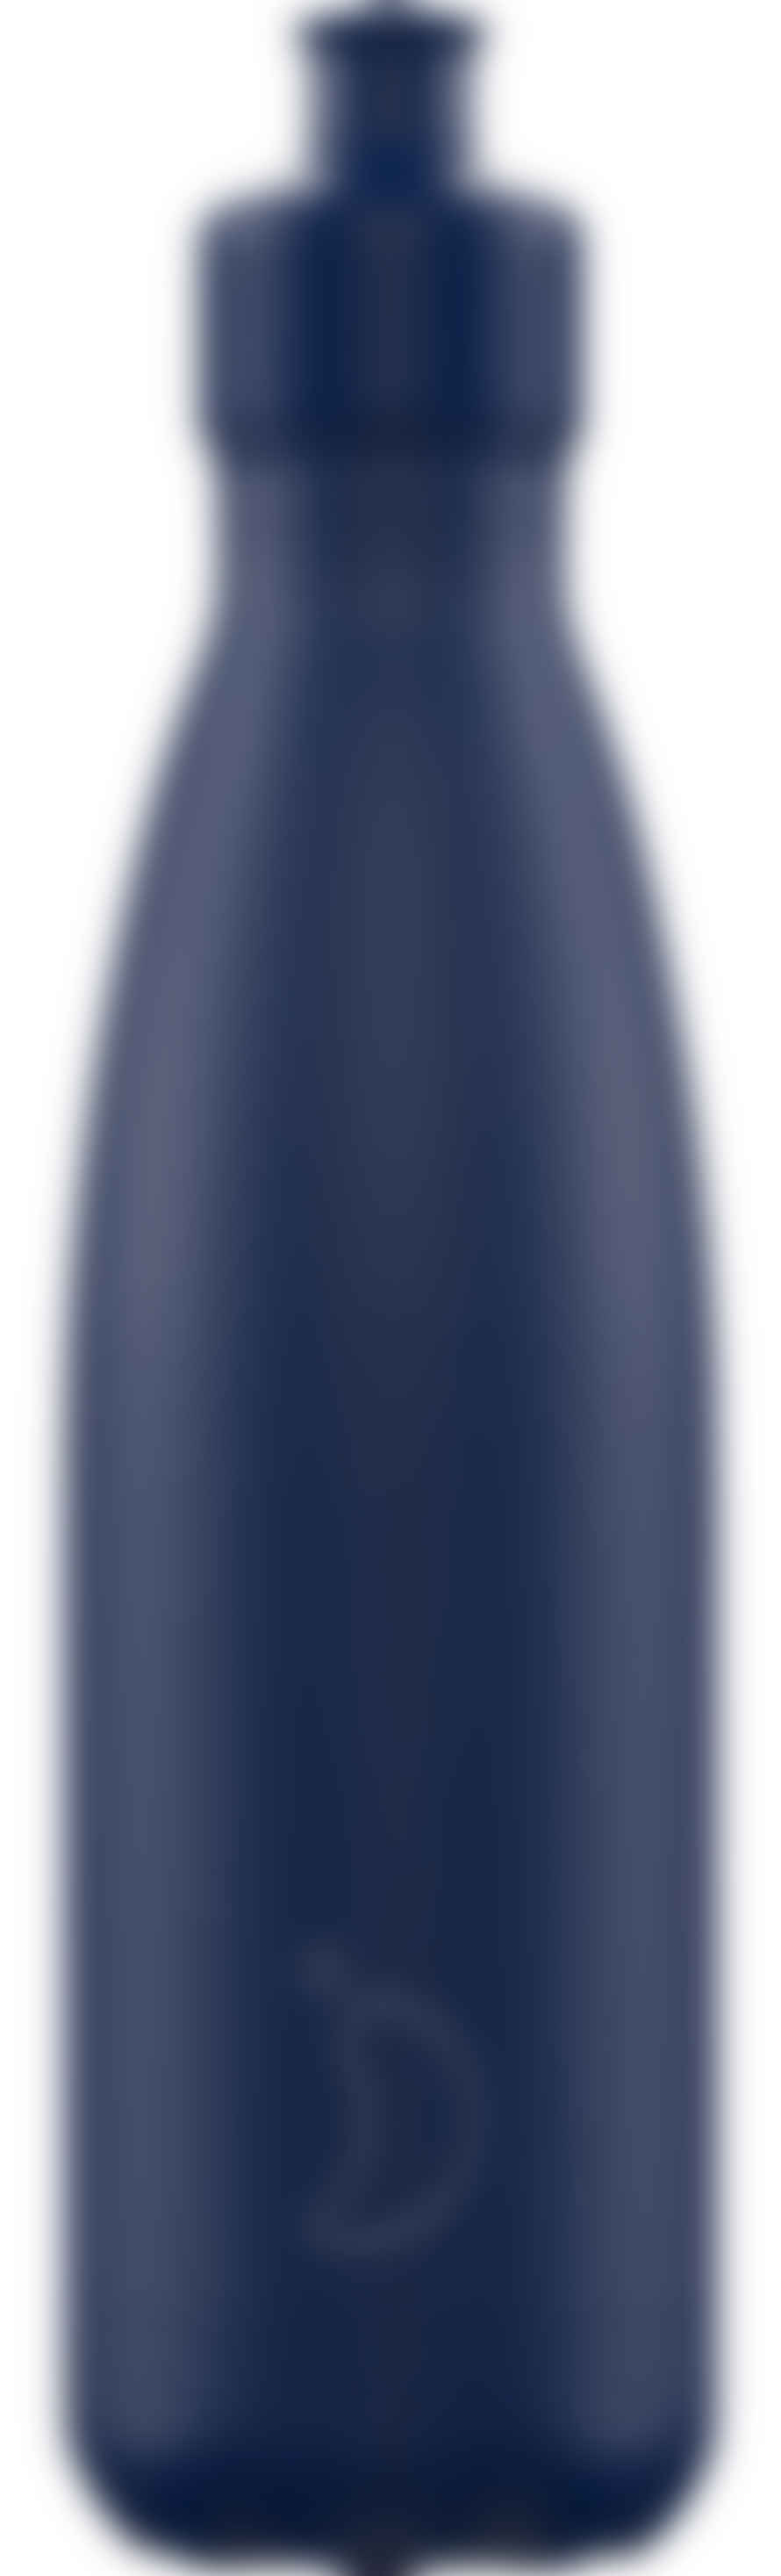 Chilly's Sports Bottle 500ml Matte Blue